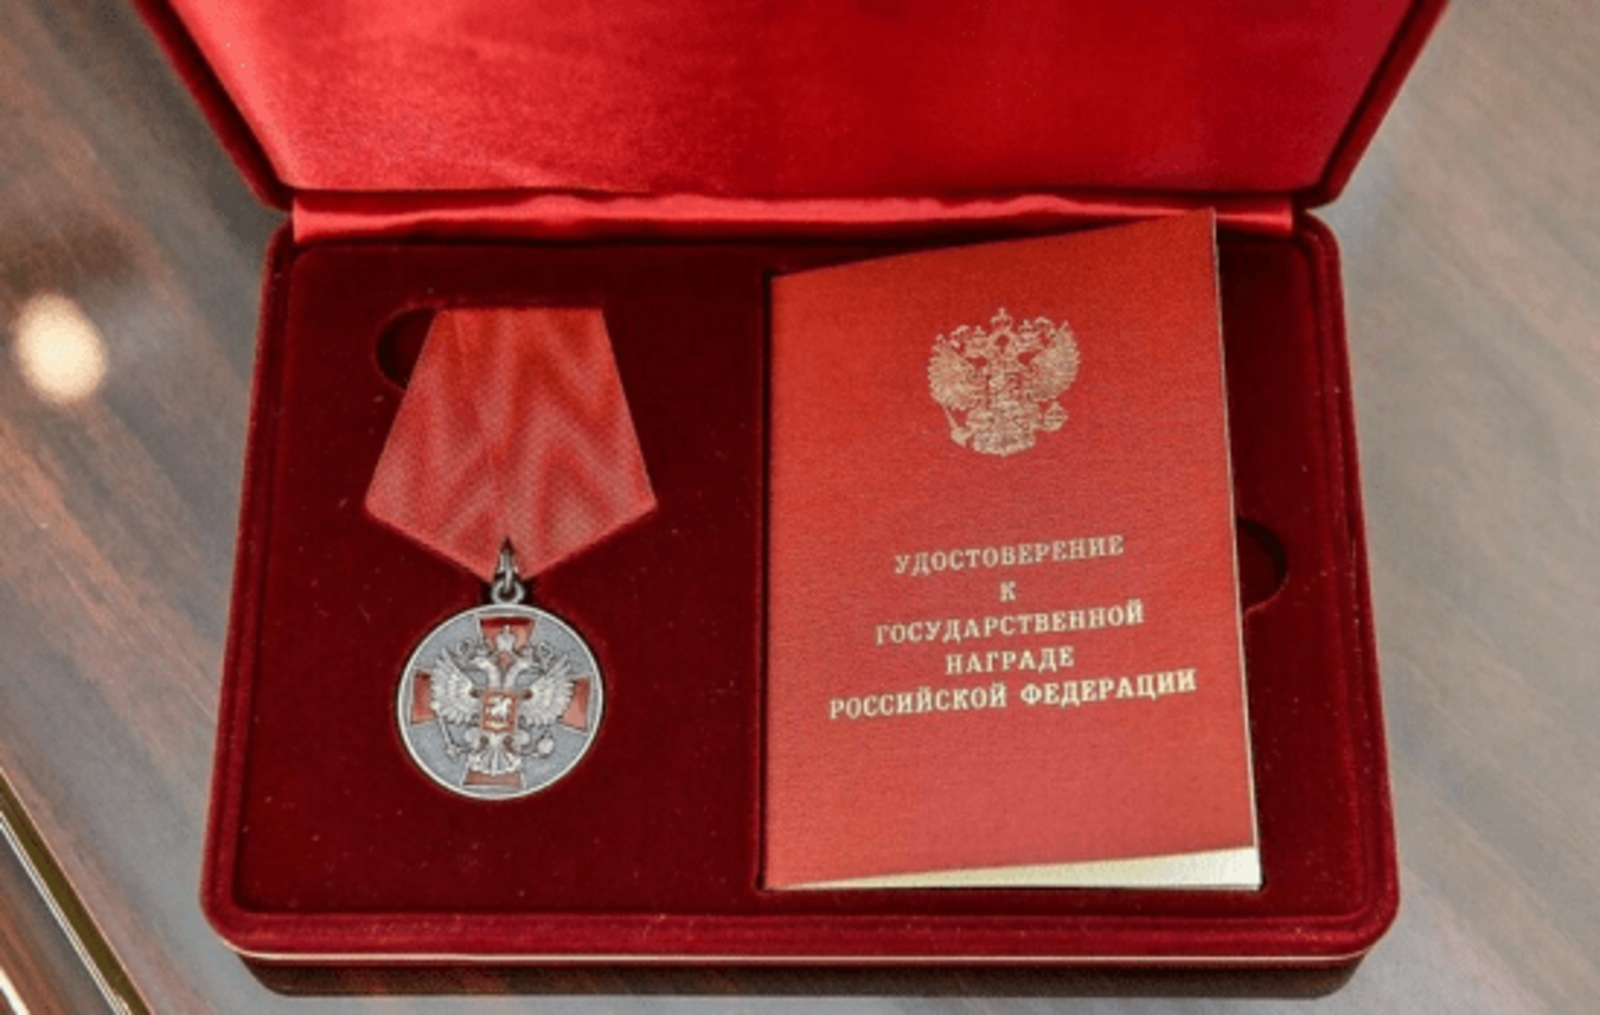 Владимир Путин наградил врача из Башкирии медалью Луки Крымского